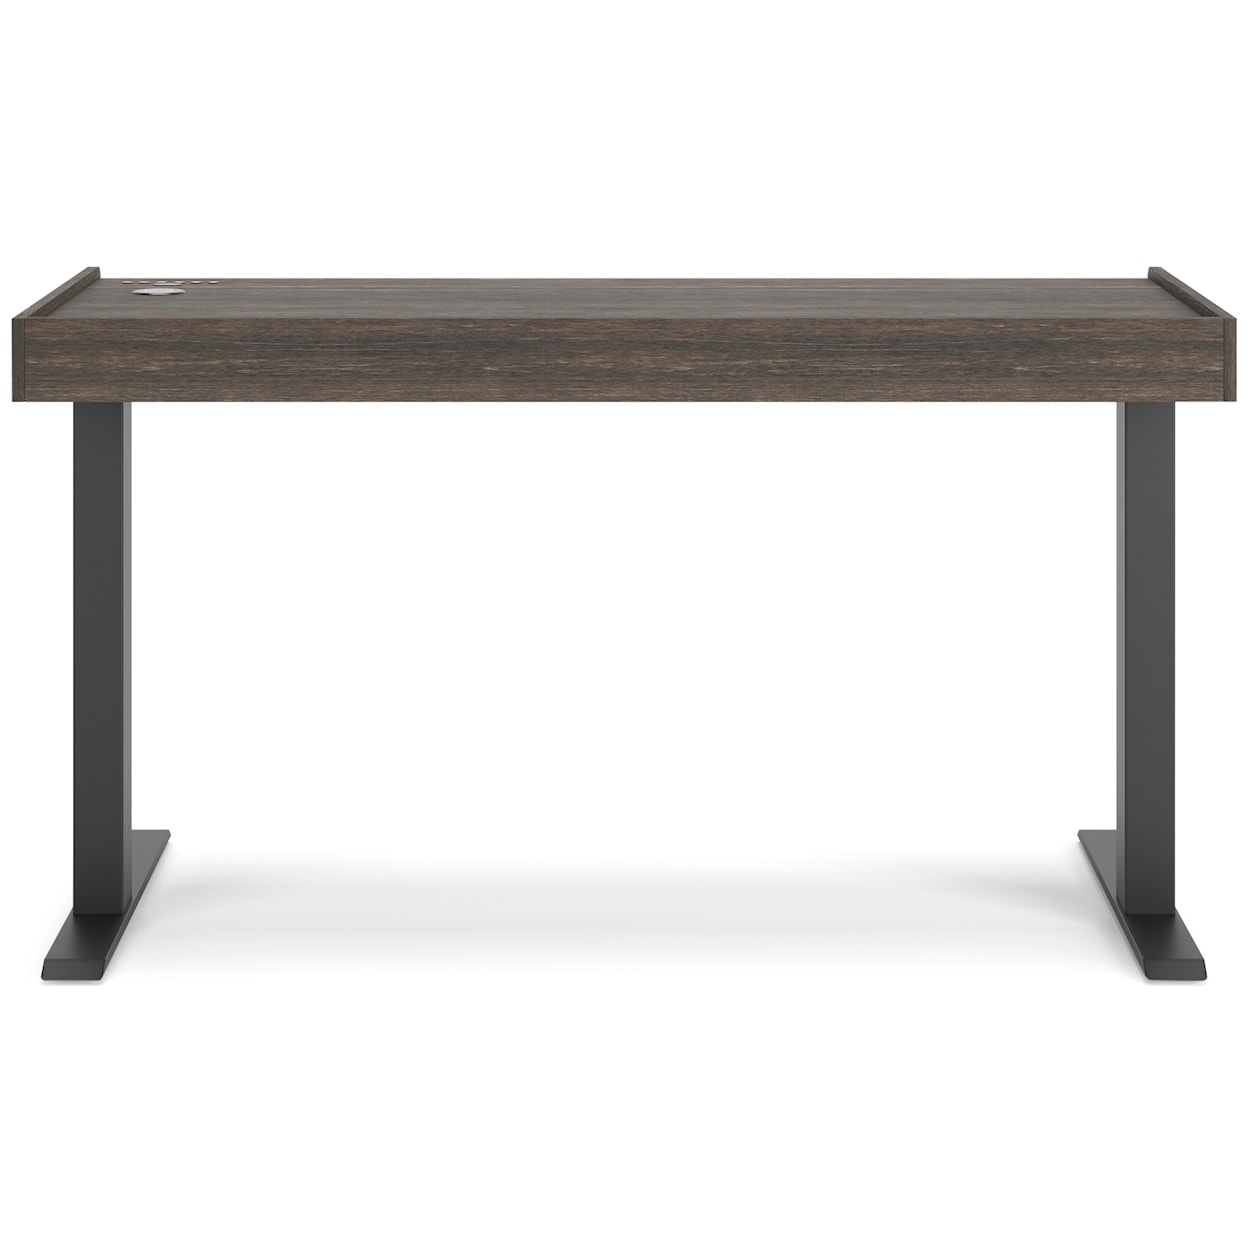 Signature Design by Ashley Furniture Zendex Adjustable Height Desk